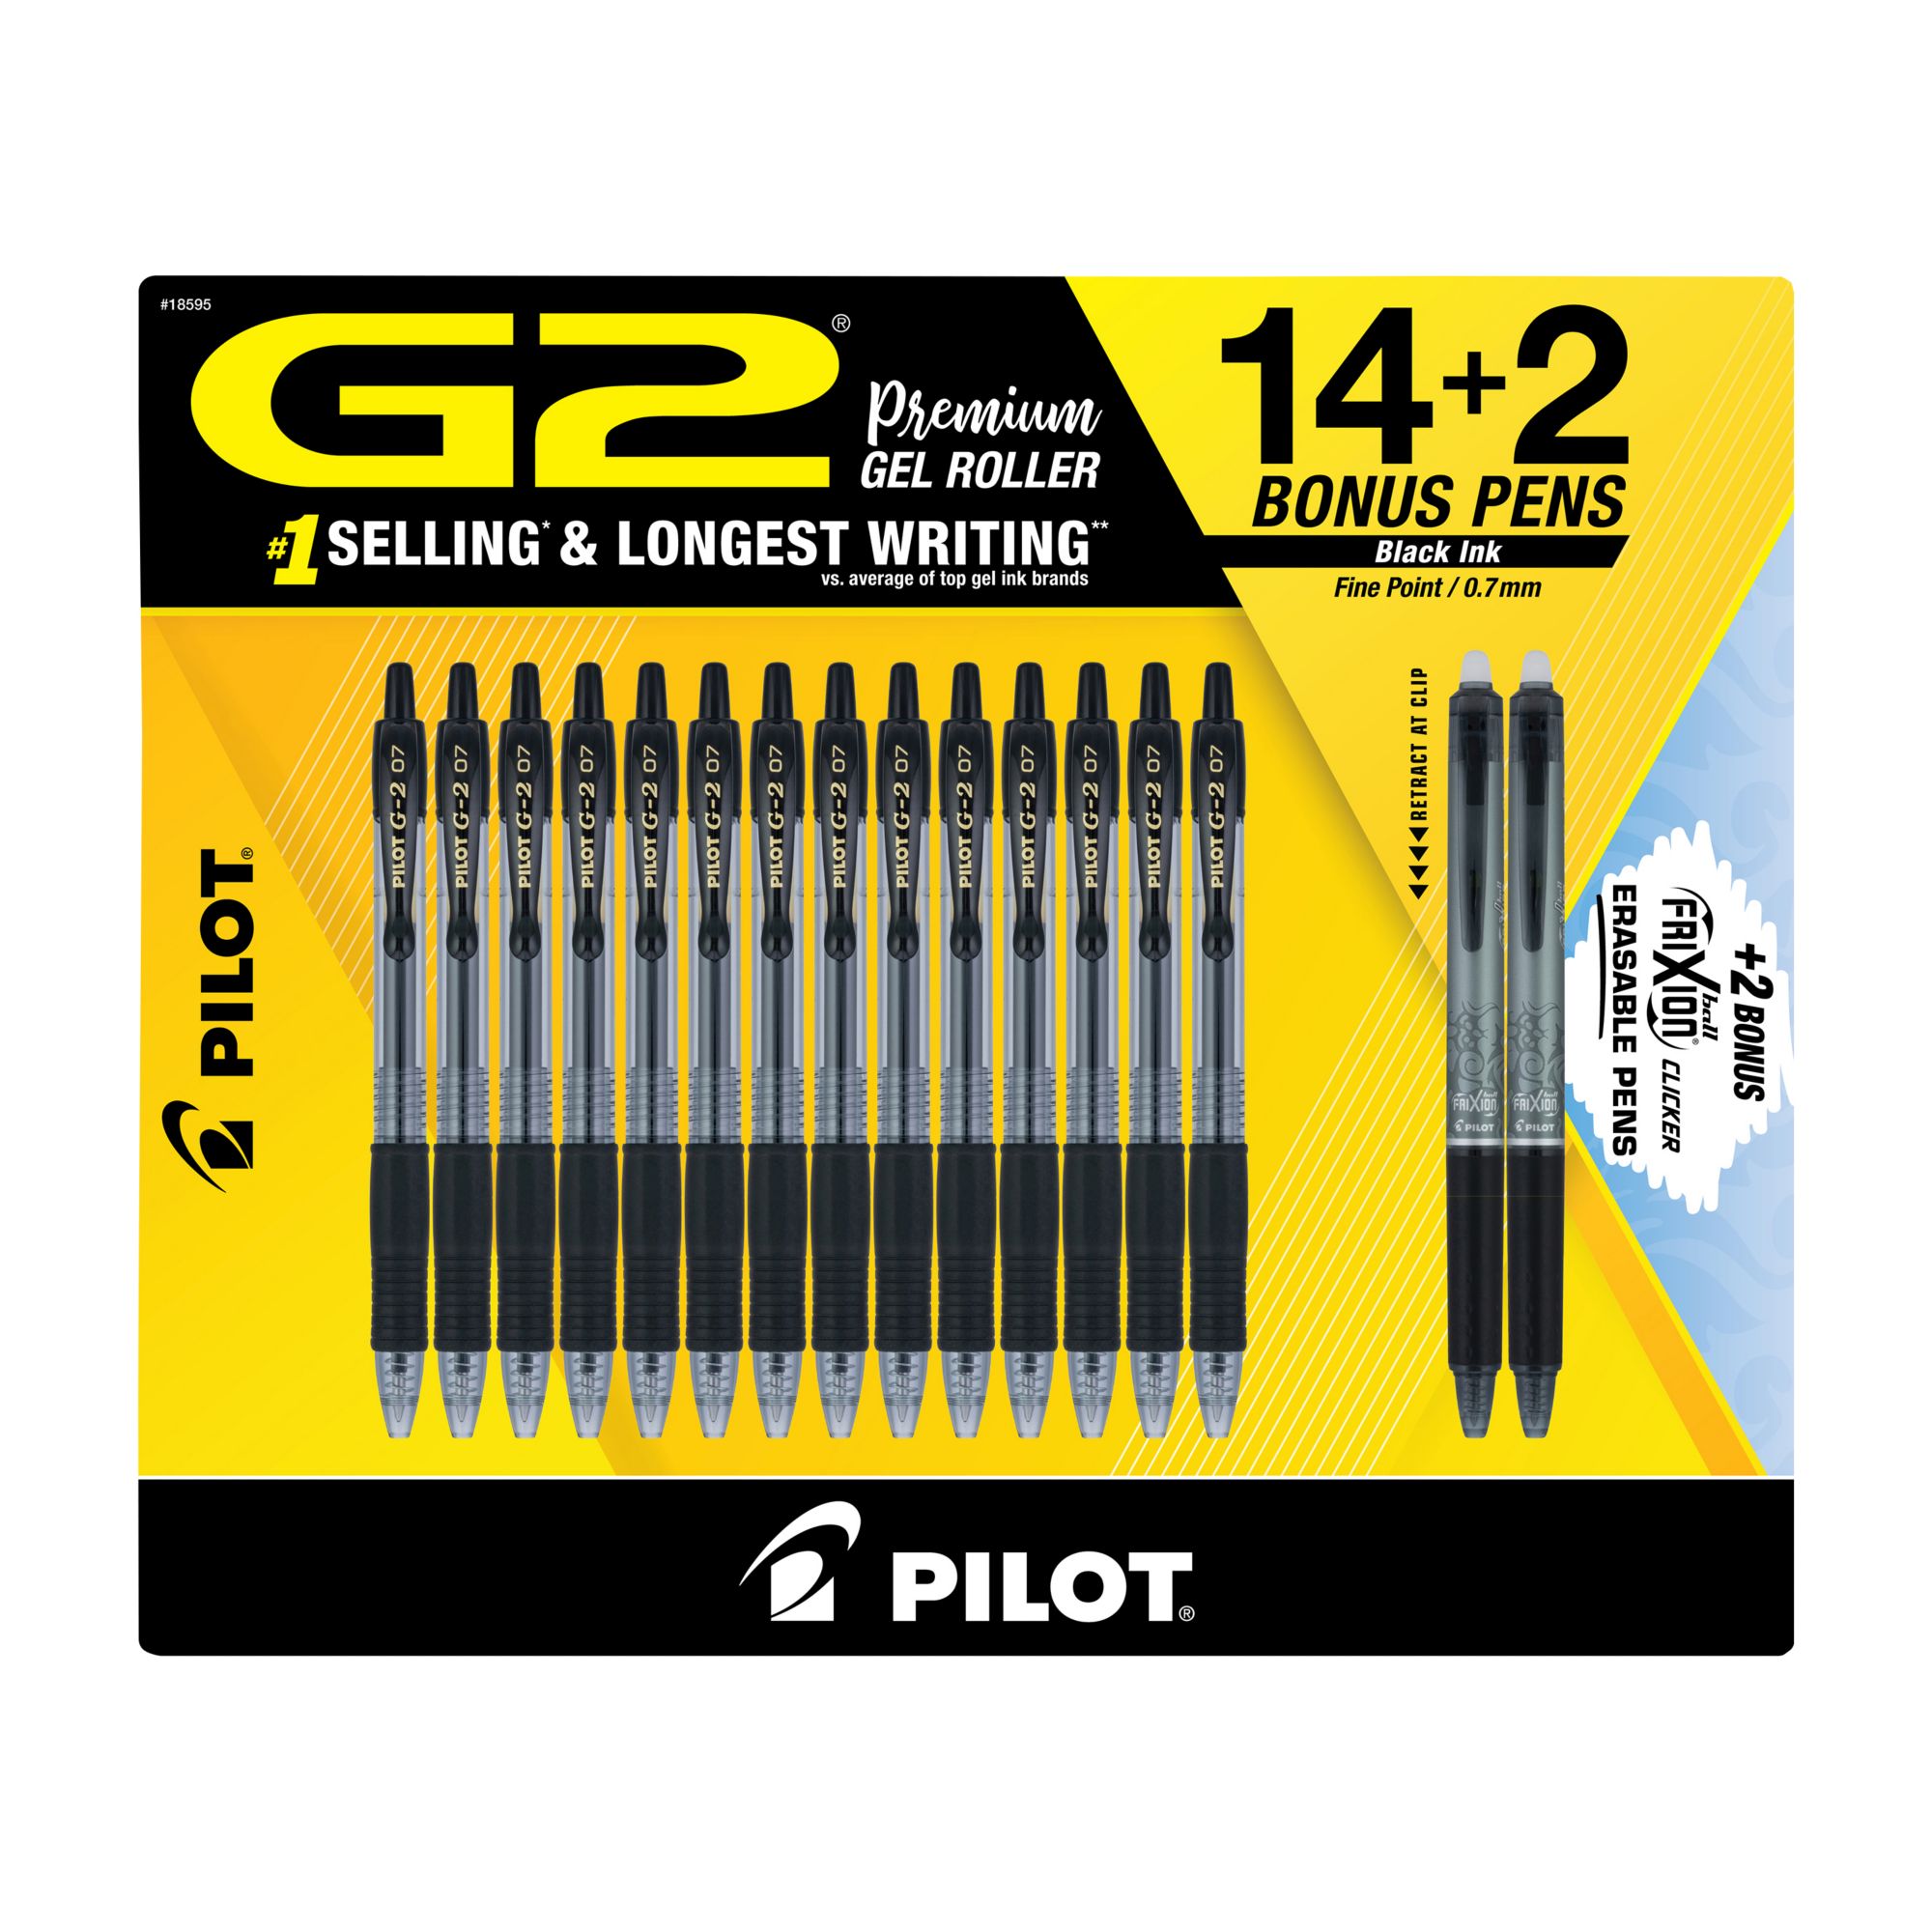 Pilot G2 Gel Pens Assorted Colors, 20-pack